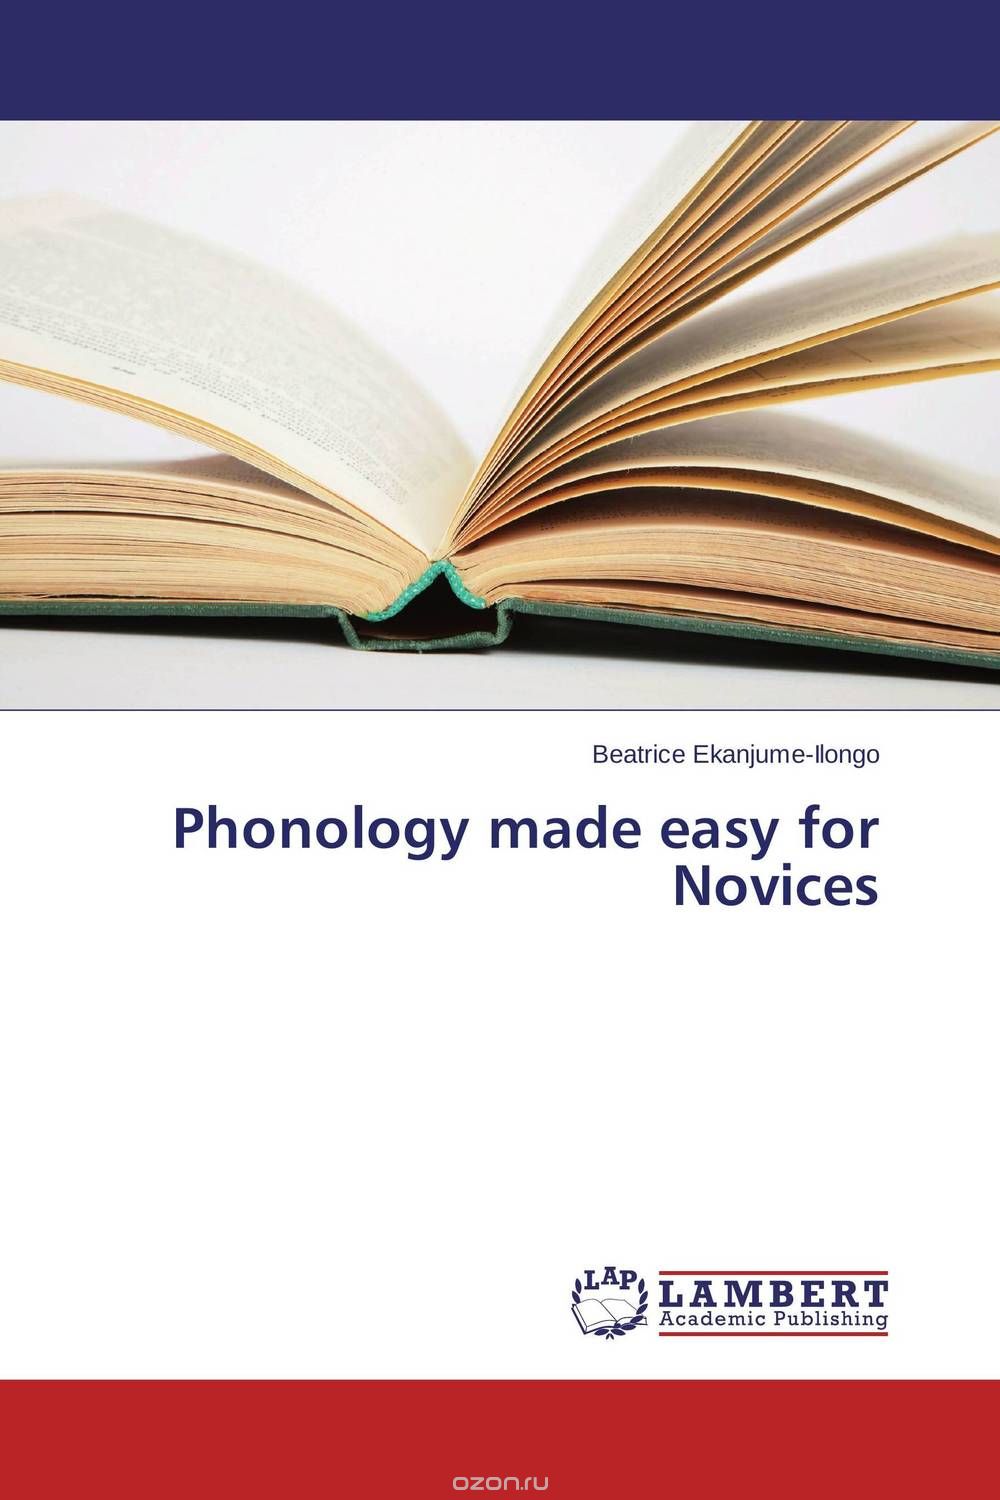 Скачать книгу "Phonology made easy for Novices"